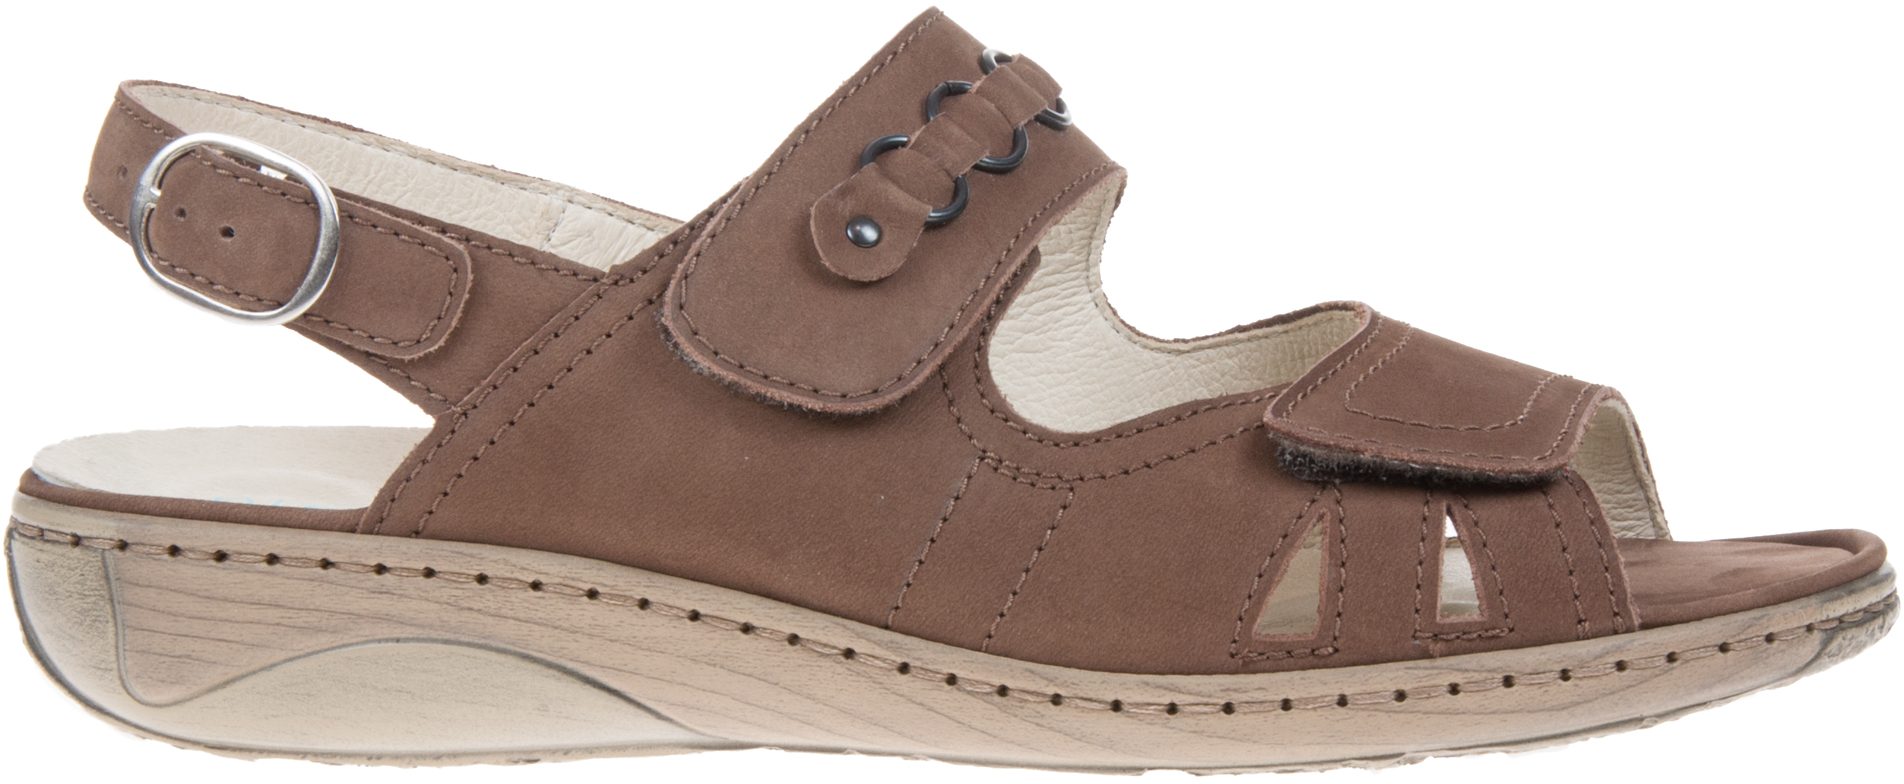 Waldlaufer Garda Brown 210004 191 046 - Full Sandals - Humphries Shoes